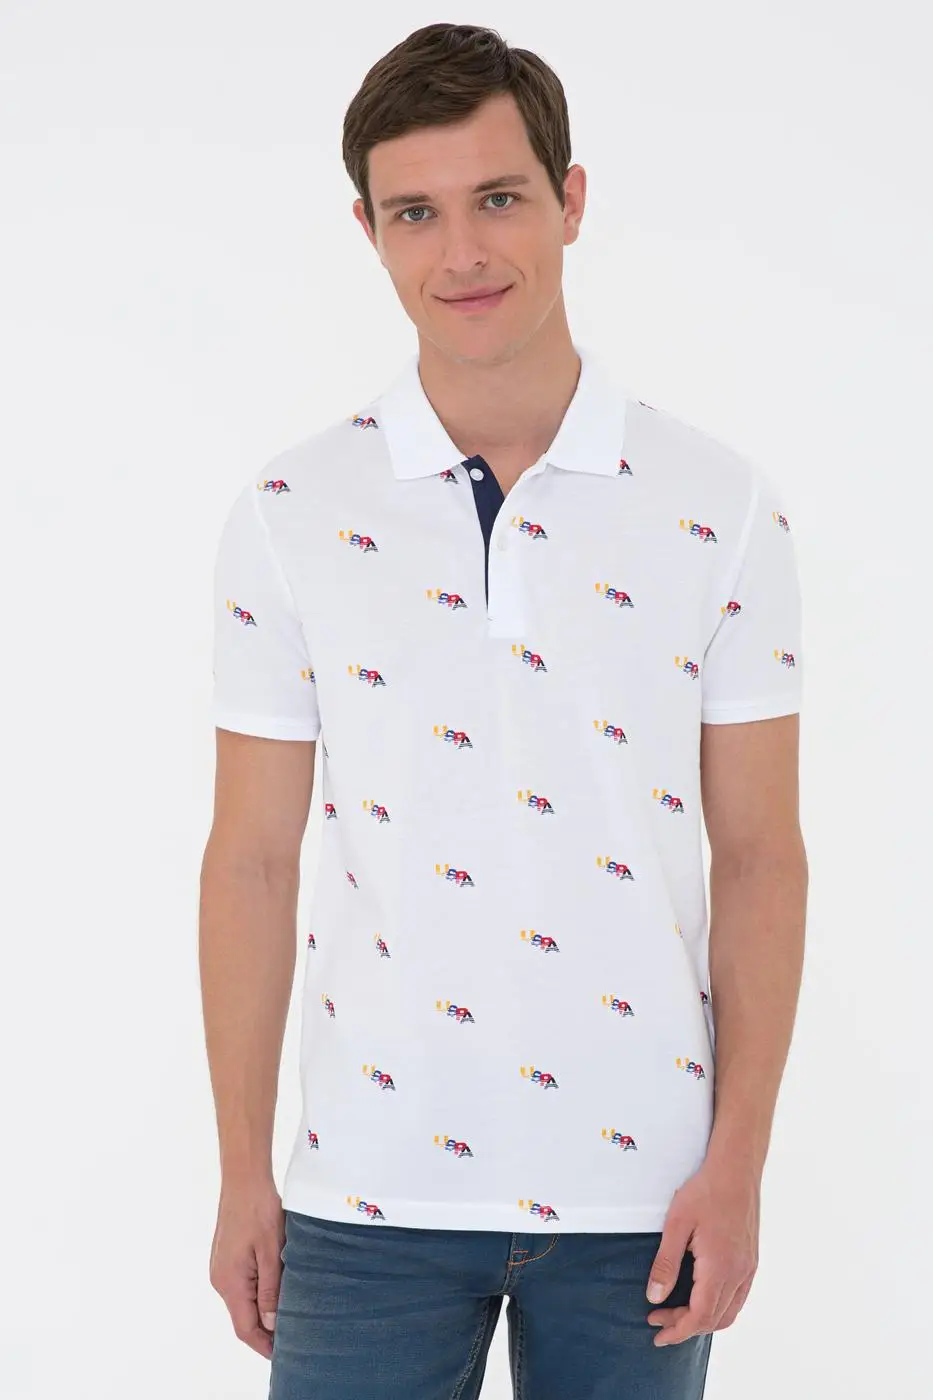 

Original Us. Polo Assn. t-shirt men cotton casual uspa logo Regular fit short sleeve multiseason classic